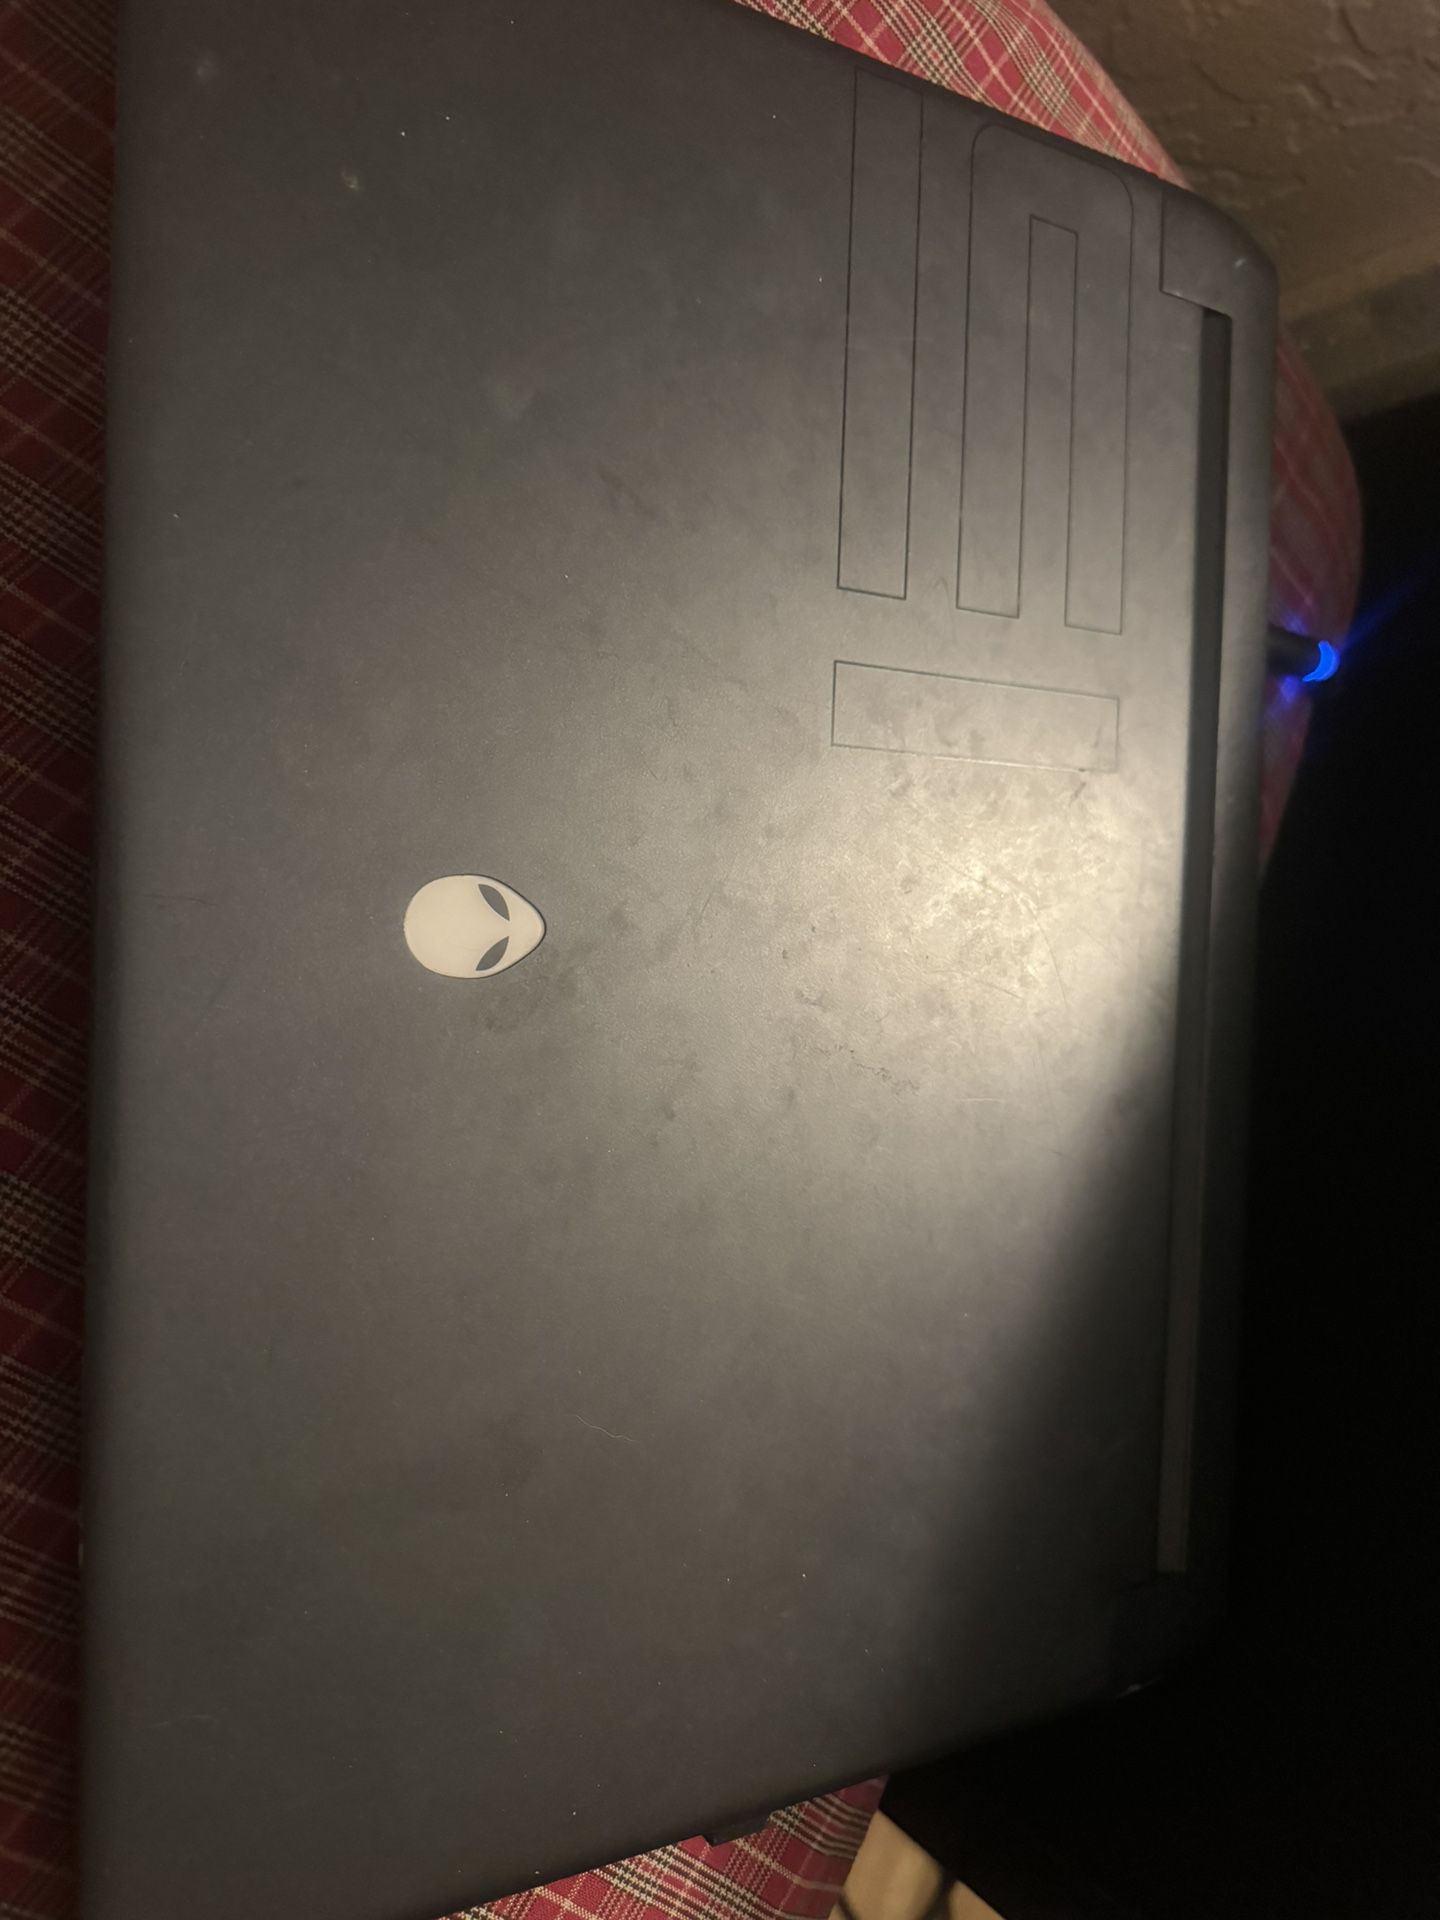 Alienware M15 R5 Gaming Laptop